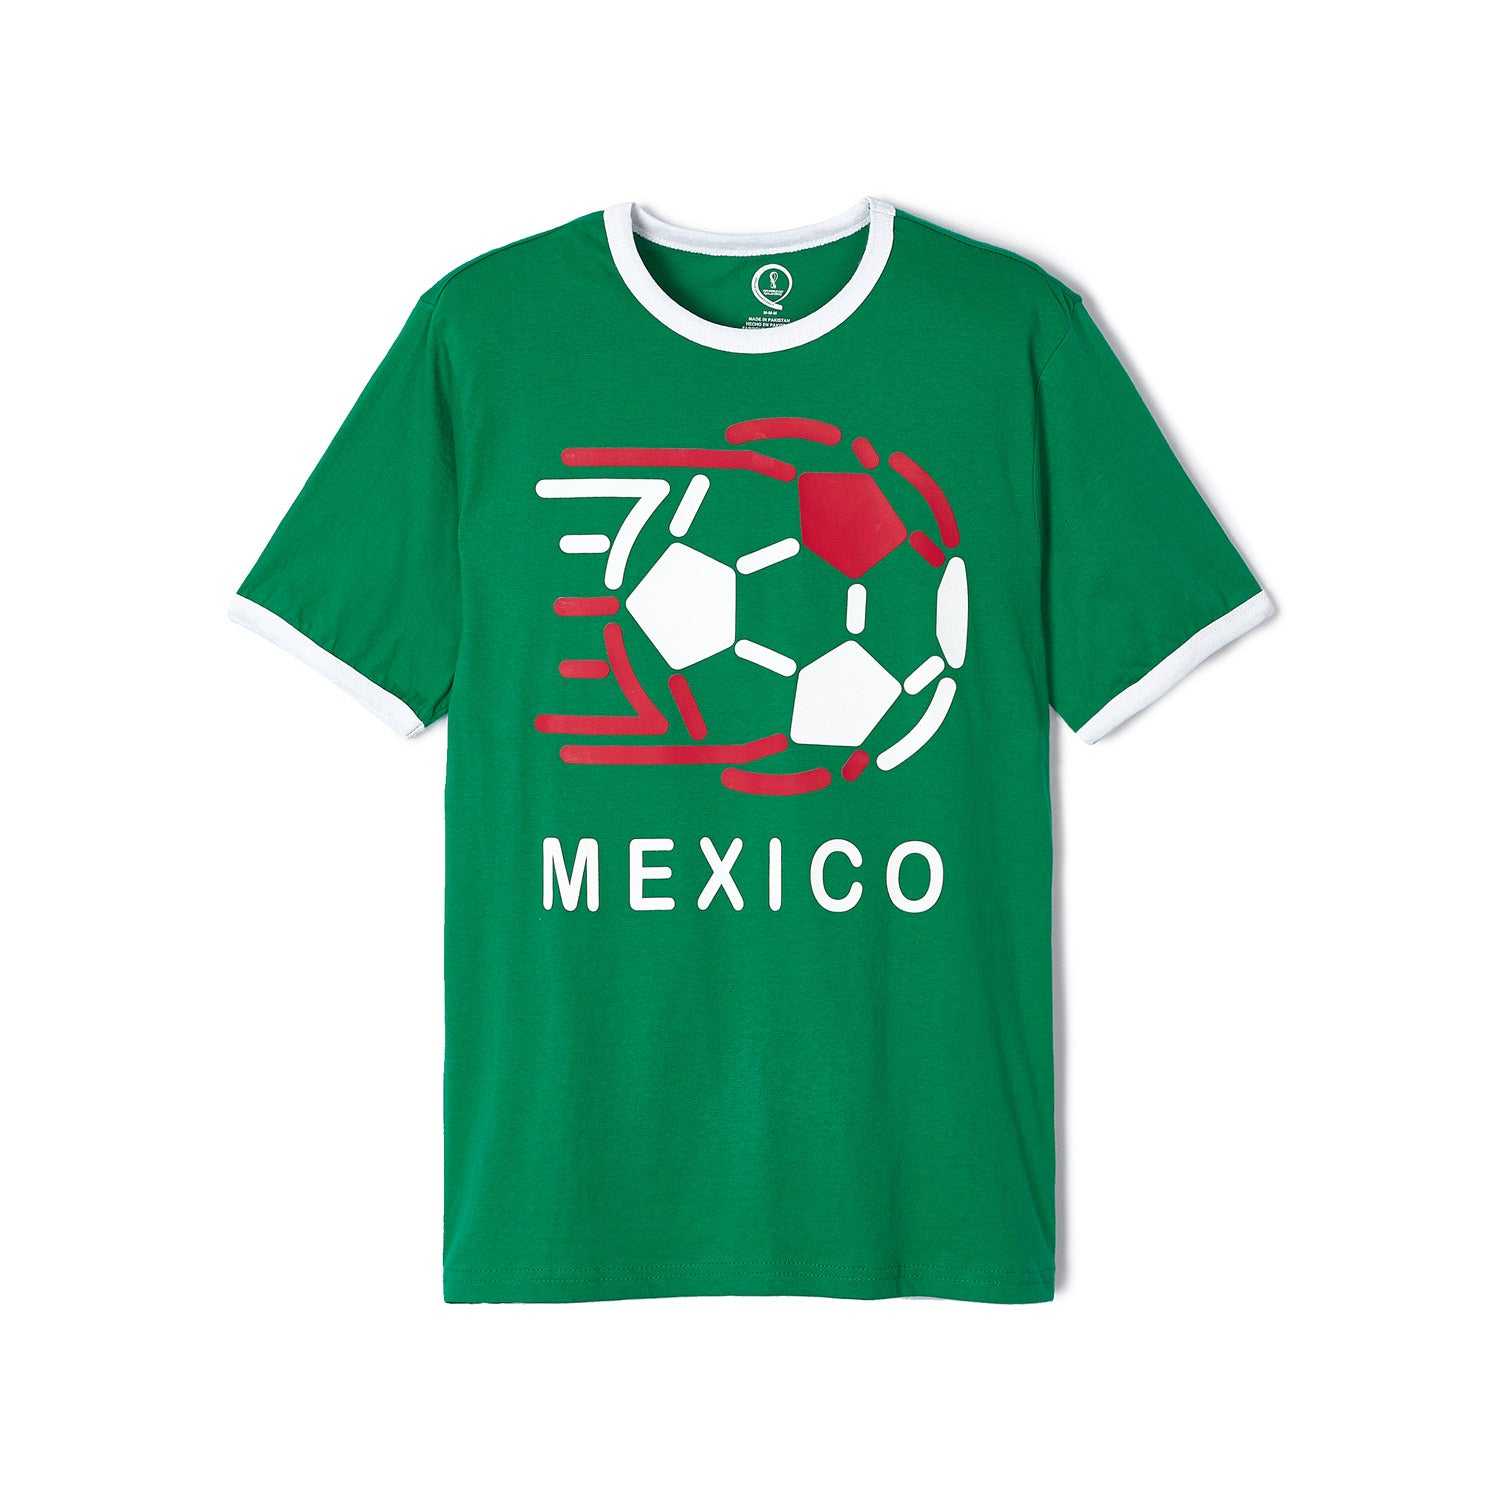 2022 World Cup Mexico Green T-Shirt - Men's